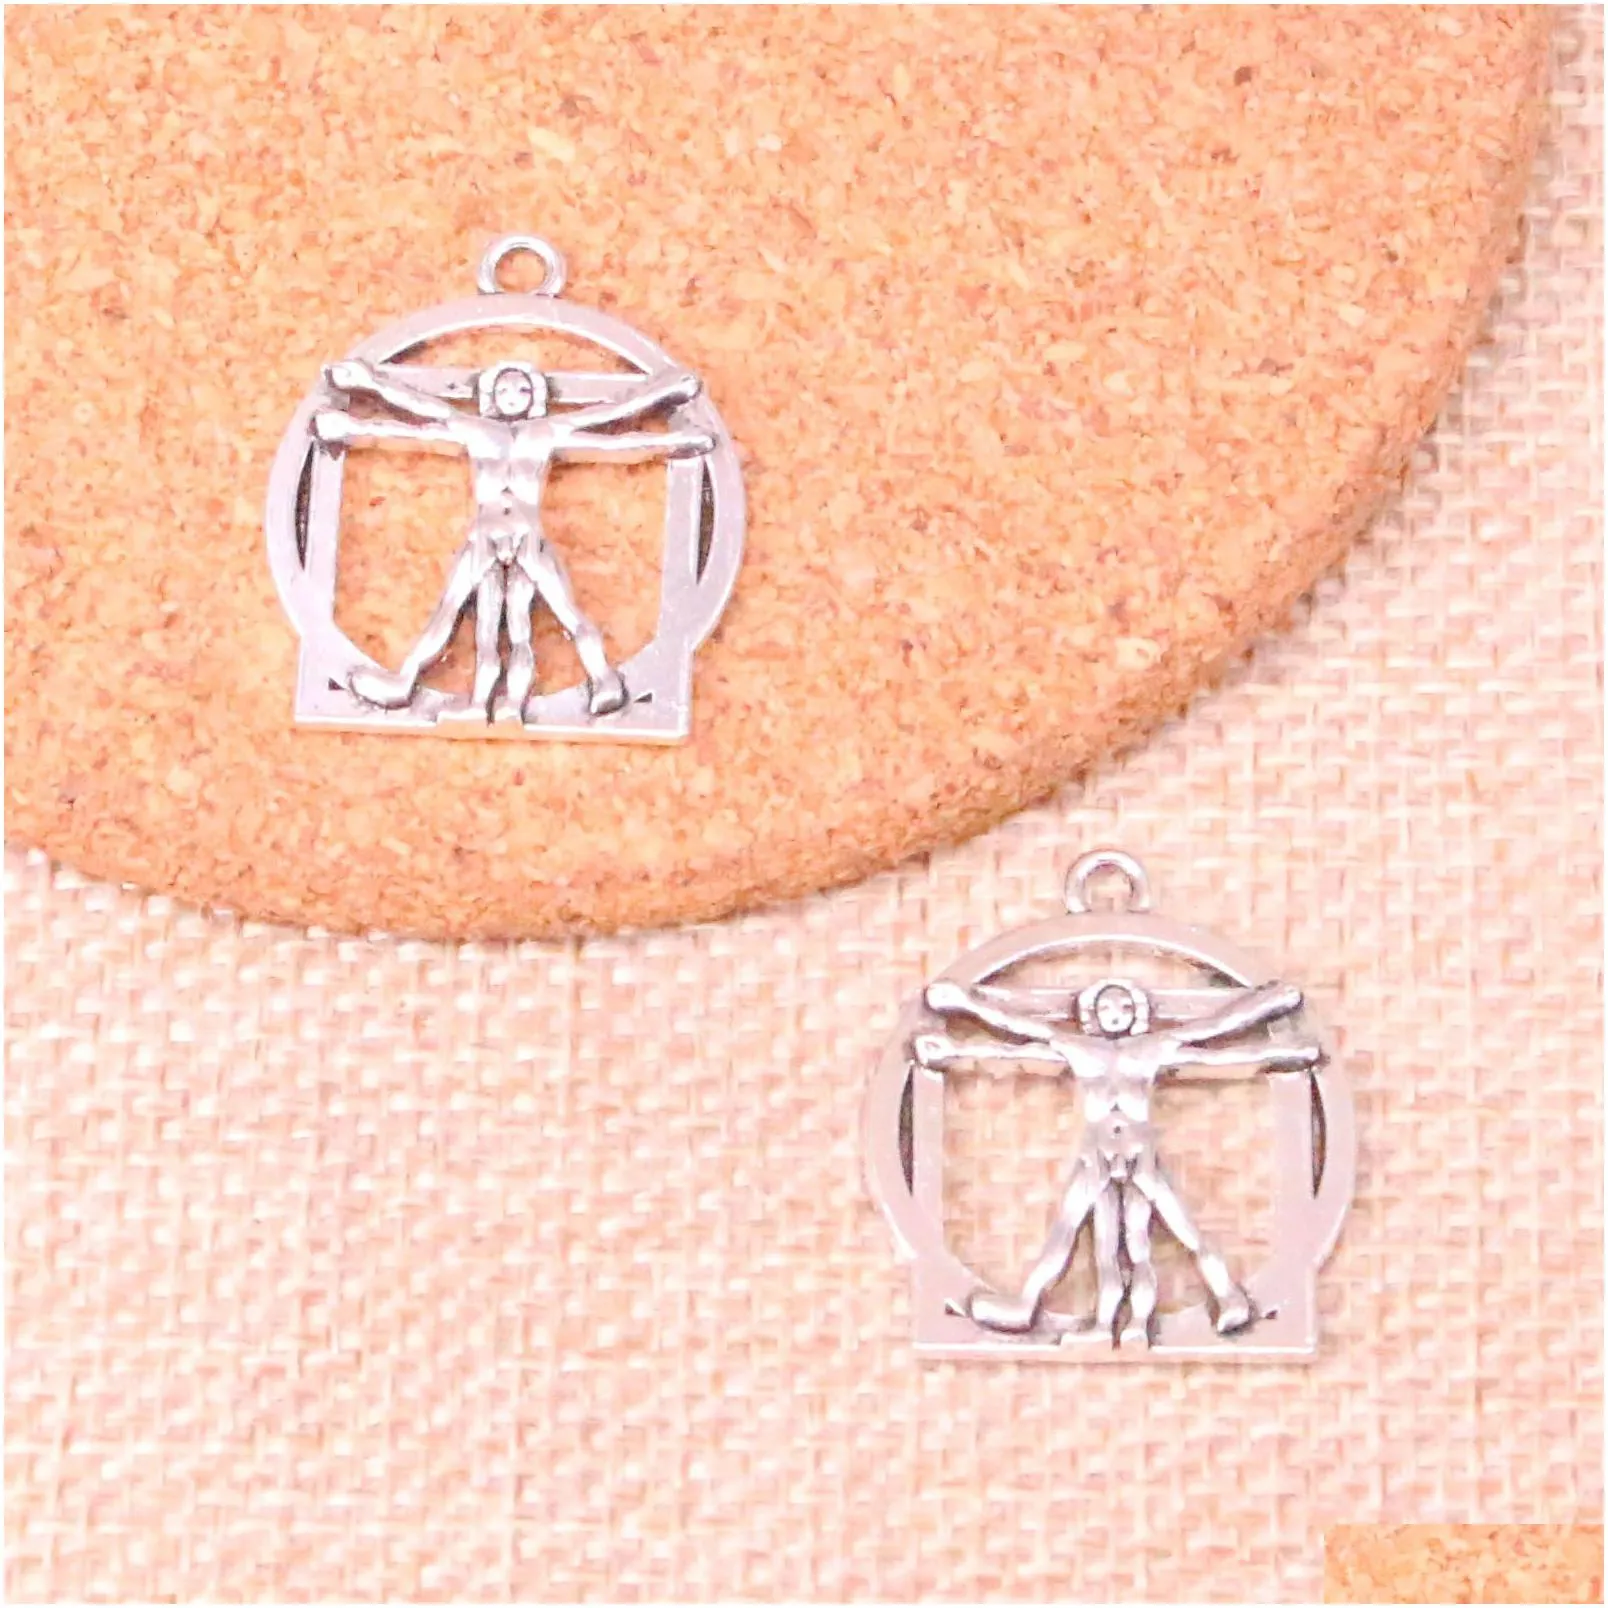 55pcs charms da vinci human figure 26x22mm antique making pendant fit vintage tibetan silver diy handmade jewelry